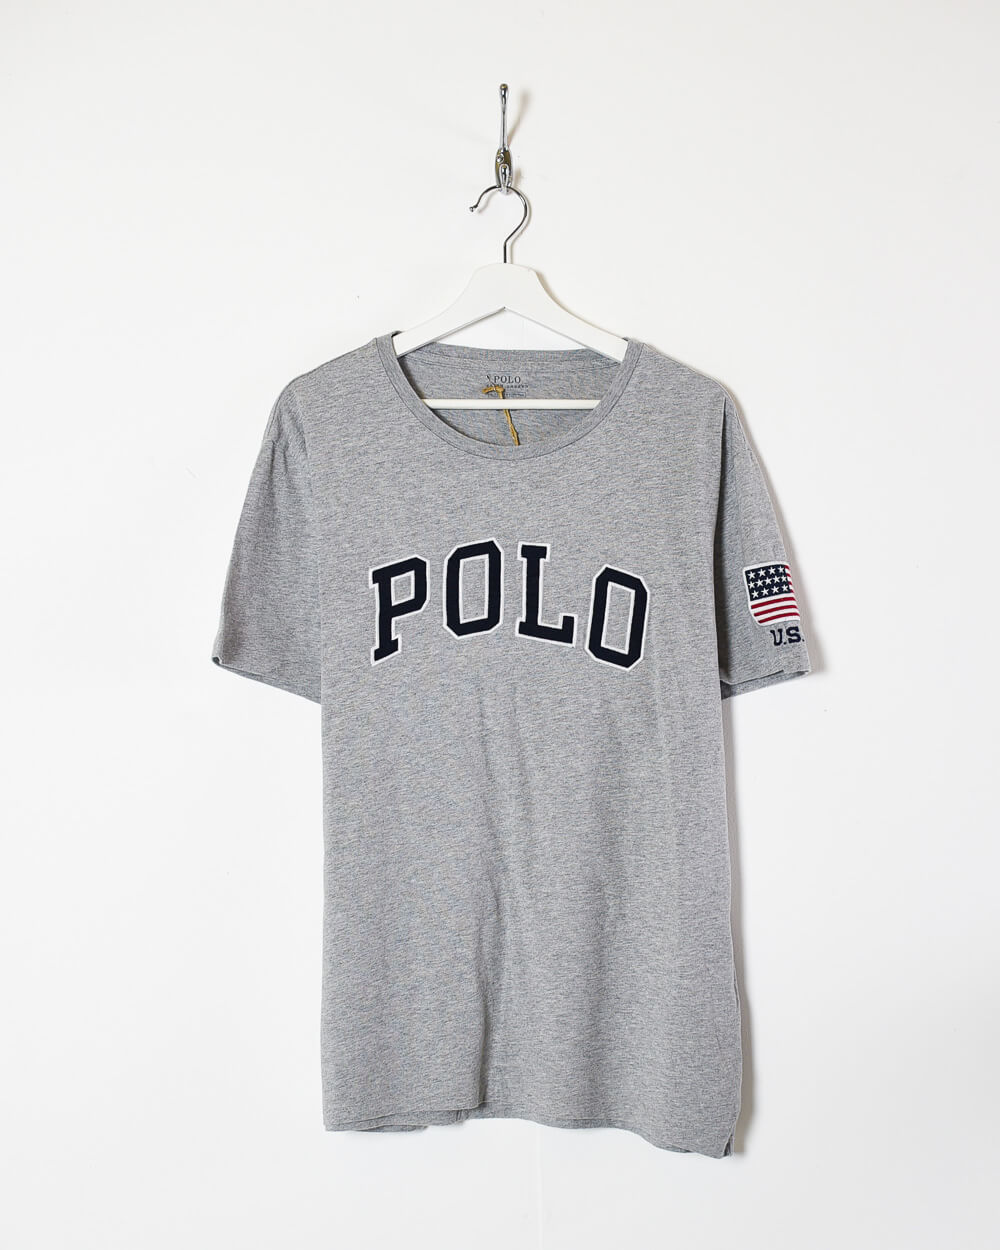 Stone Ralph Lauren Polo USA T-Shirt - Large